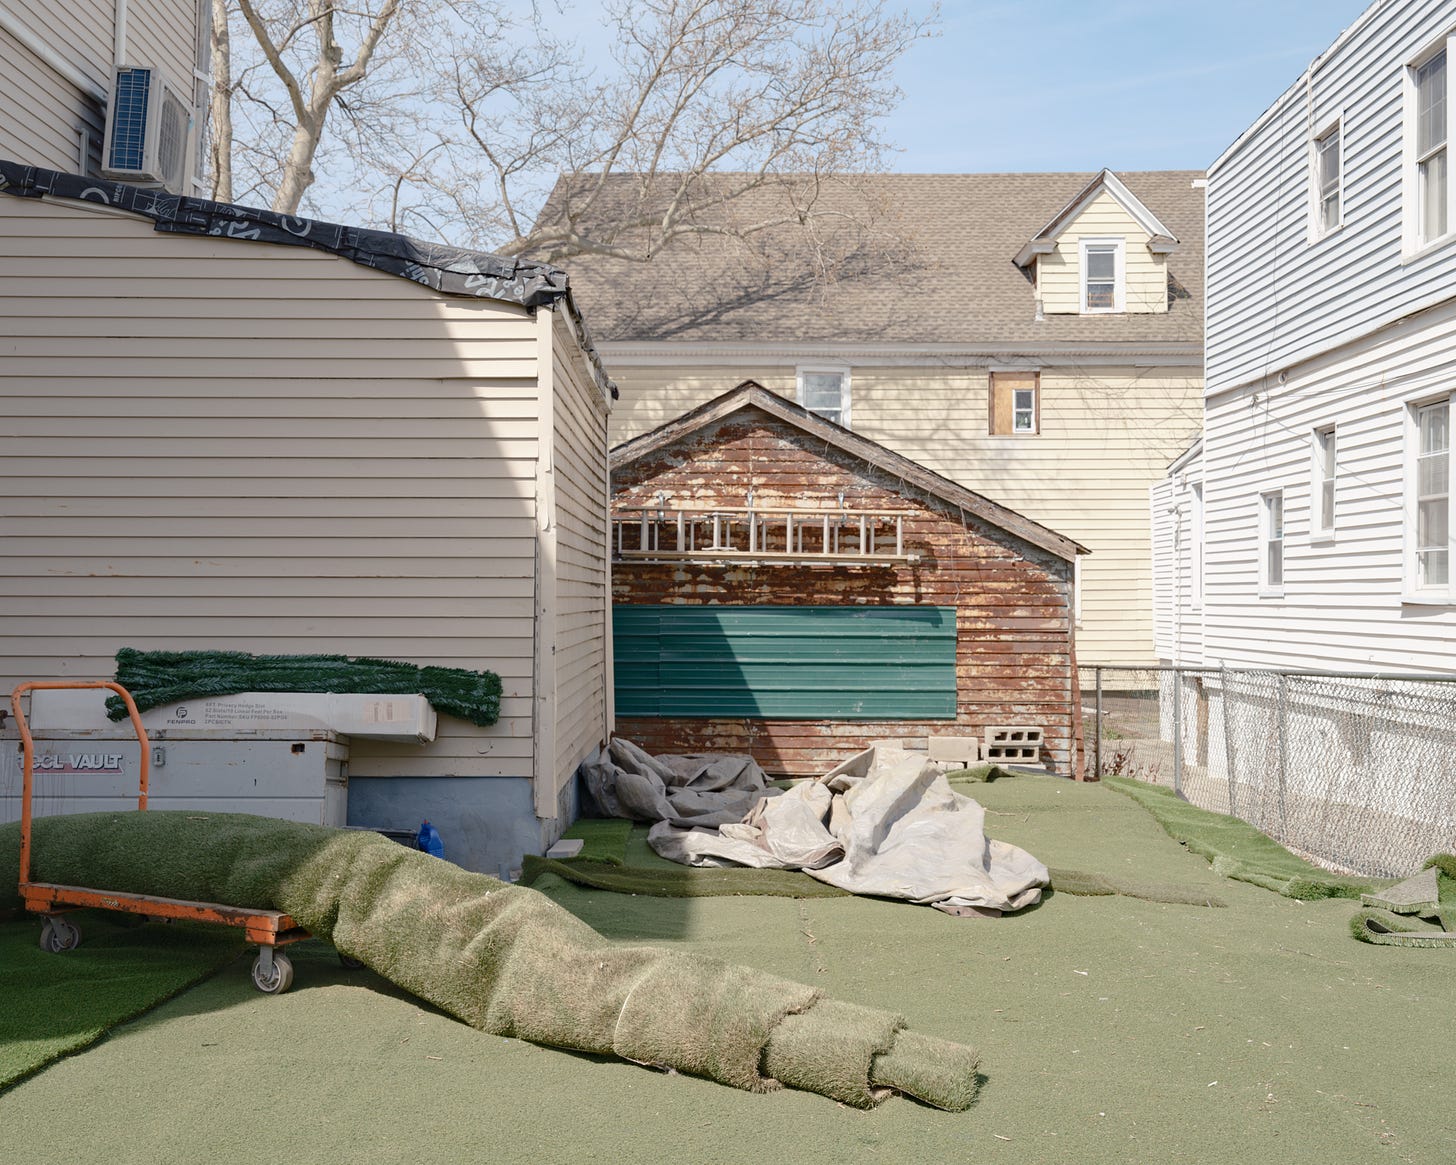 Large roll of green astroturf lies on top of orange cart in backyard of Woodside homes